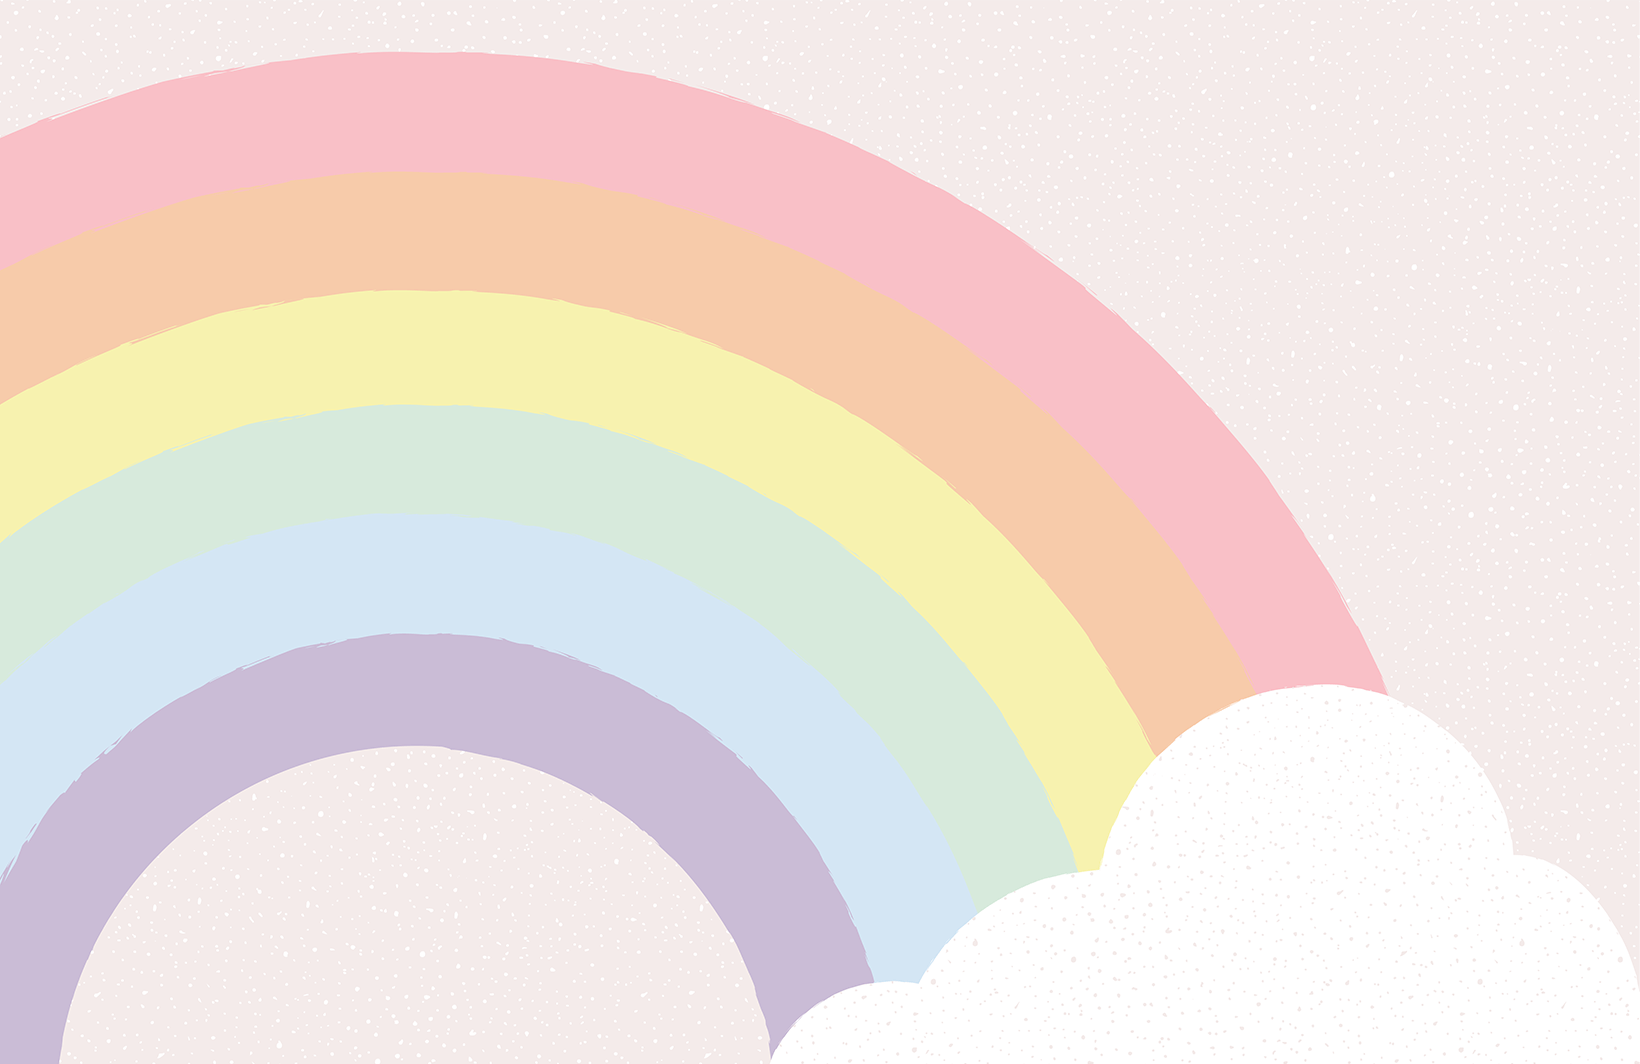 A pastel rainbow on a light pink background - Pastel rainbow, rainbows